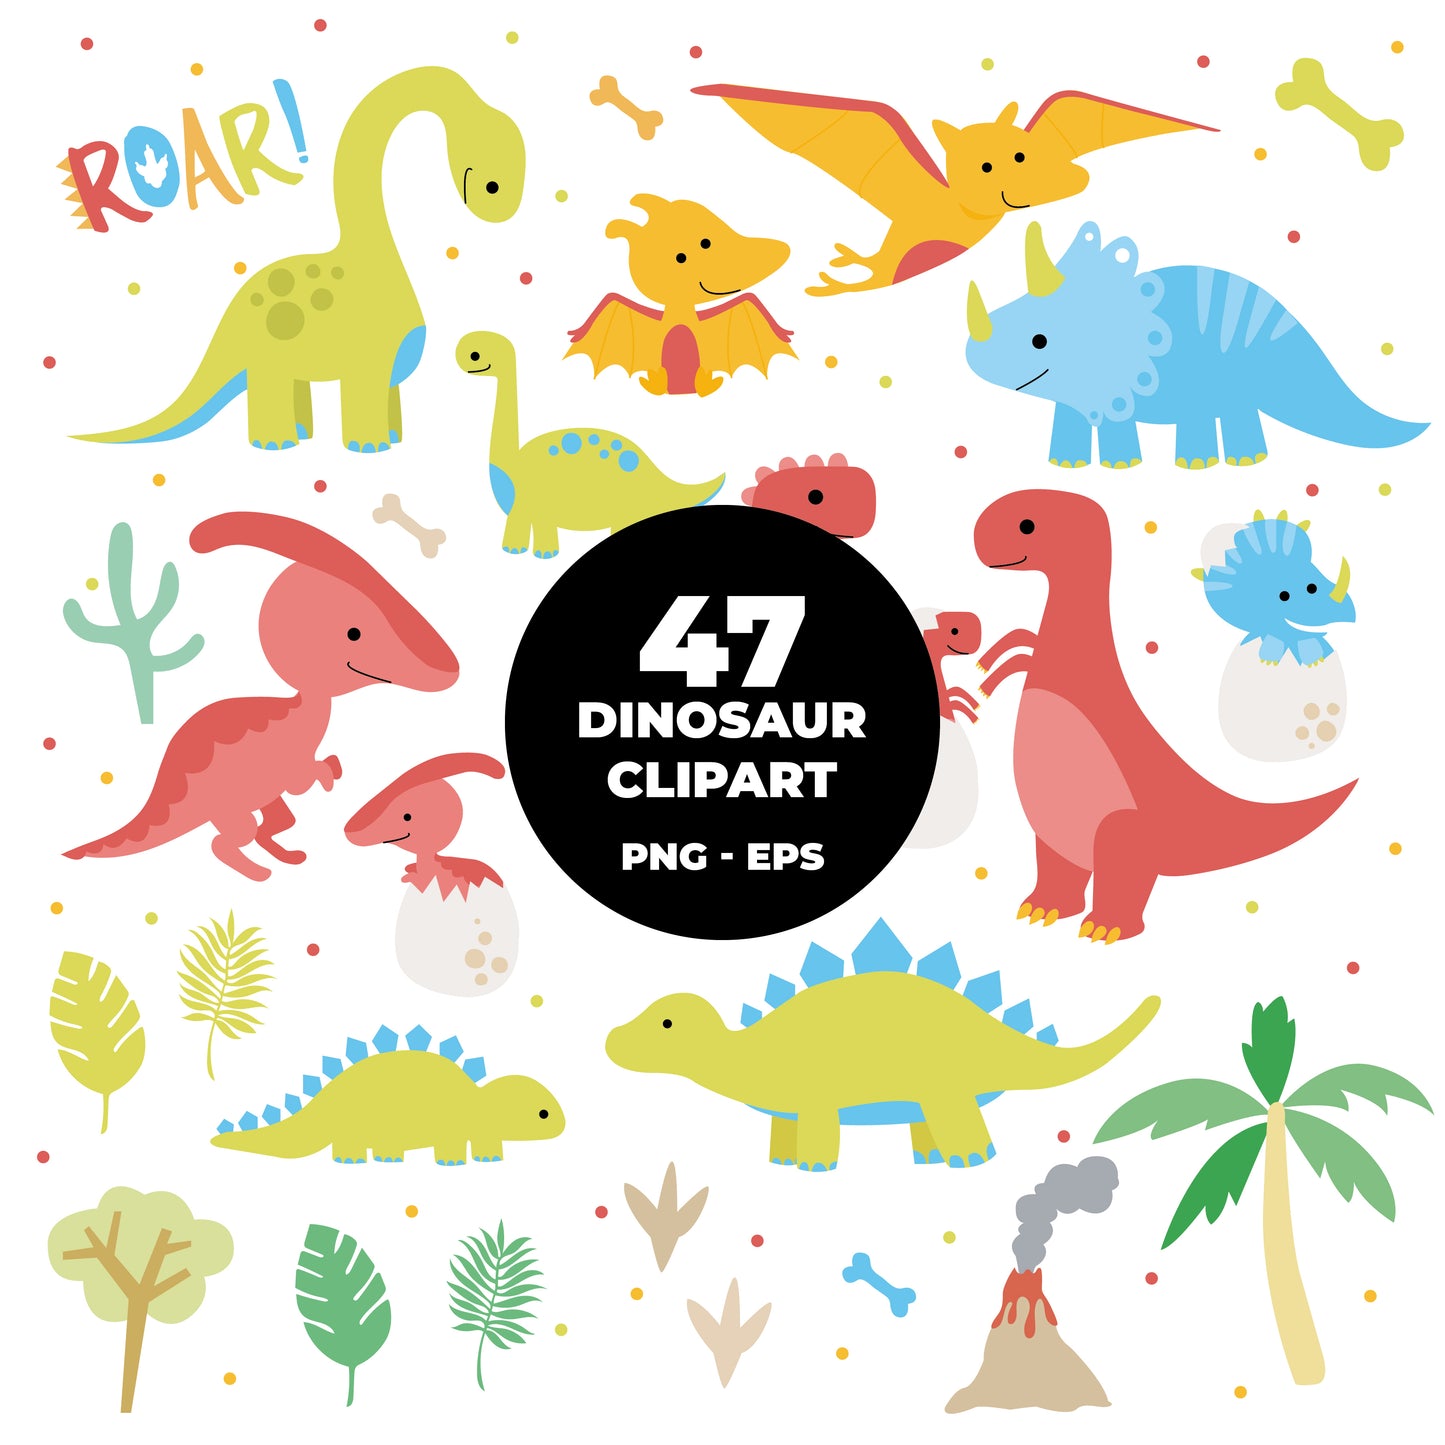 COD793 - Dinosaur clipart, kids dinosaur clipart, t-rex clipart, dino clipart, triceratops clipart files